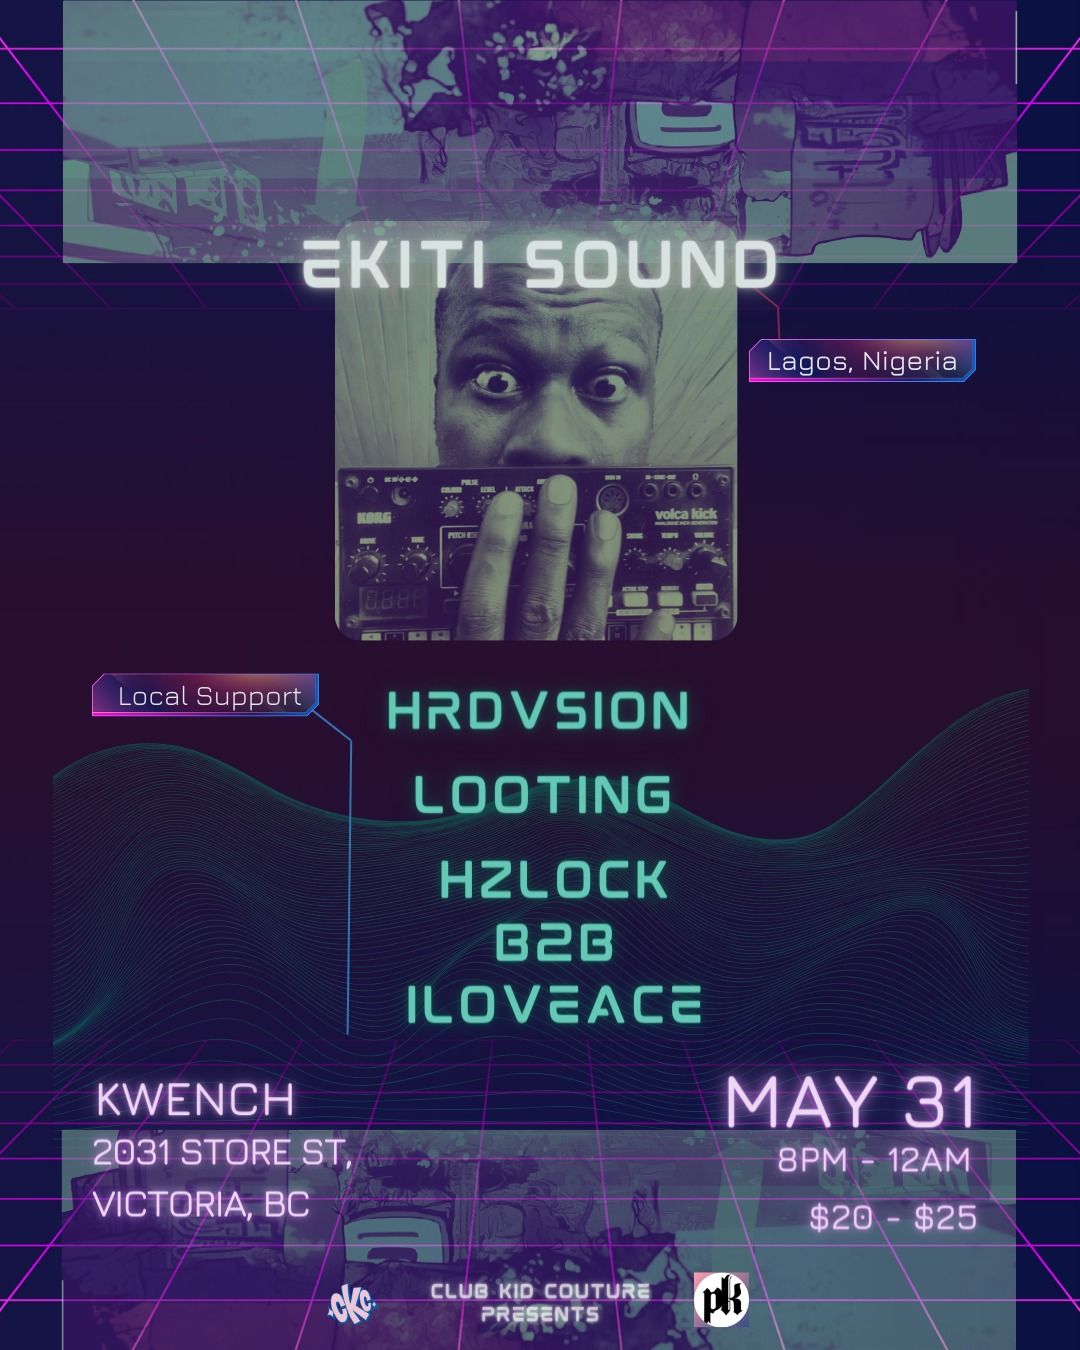 cKc presents ... Ekiti Sound [Lagos] (with local support)